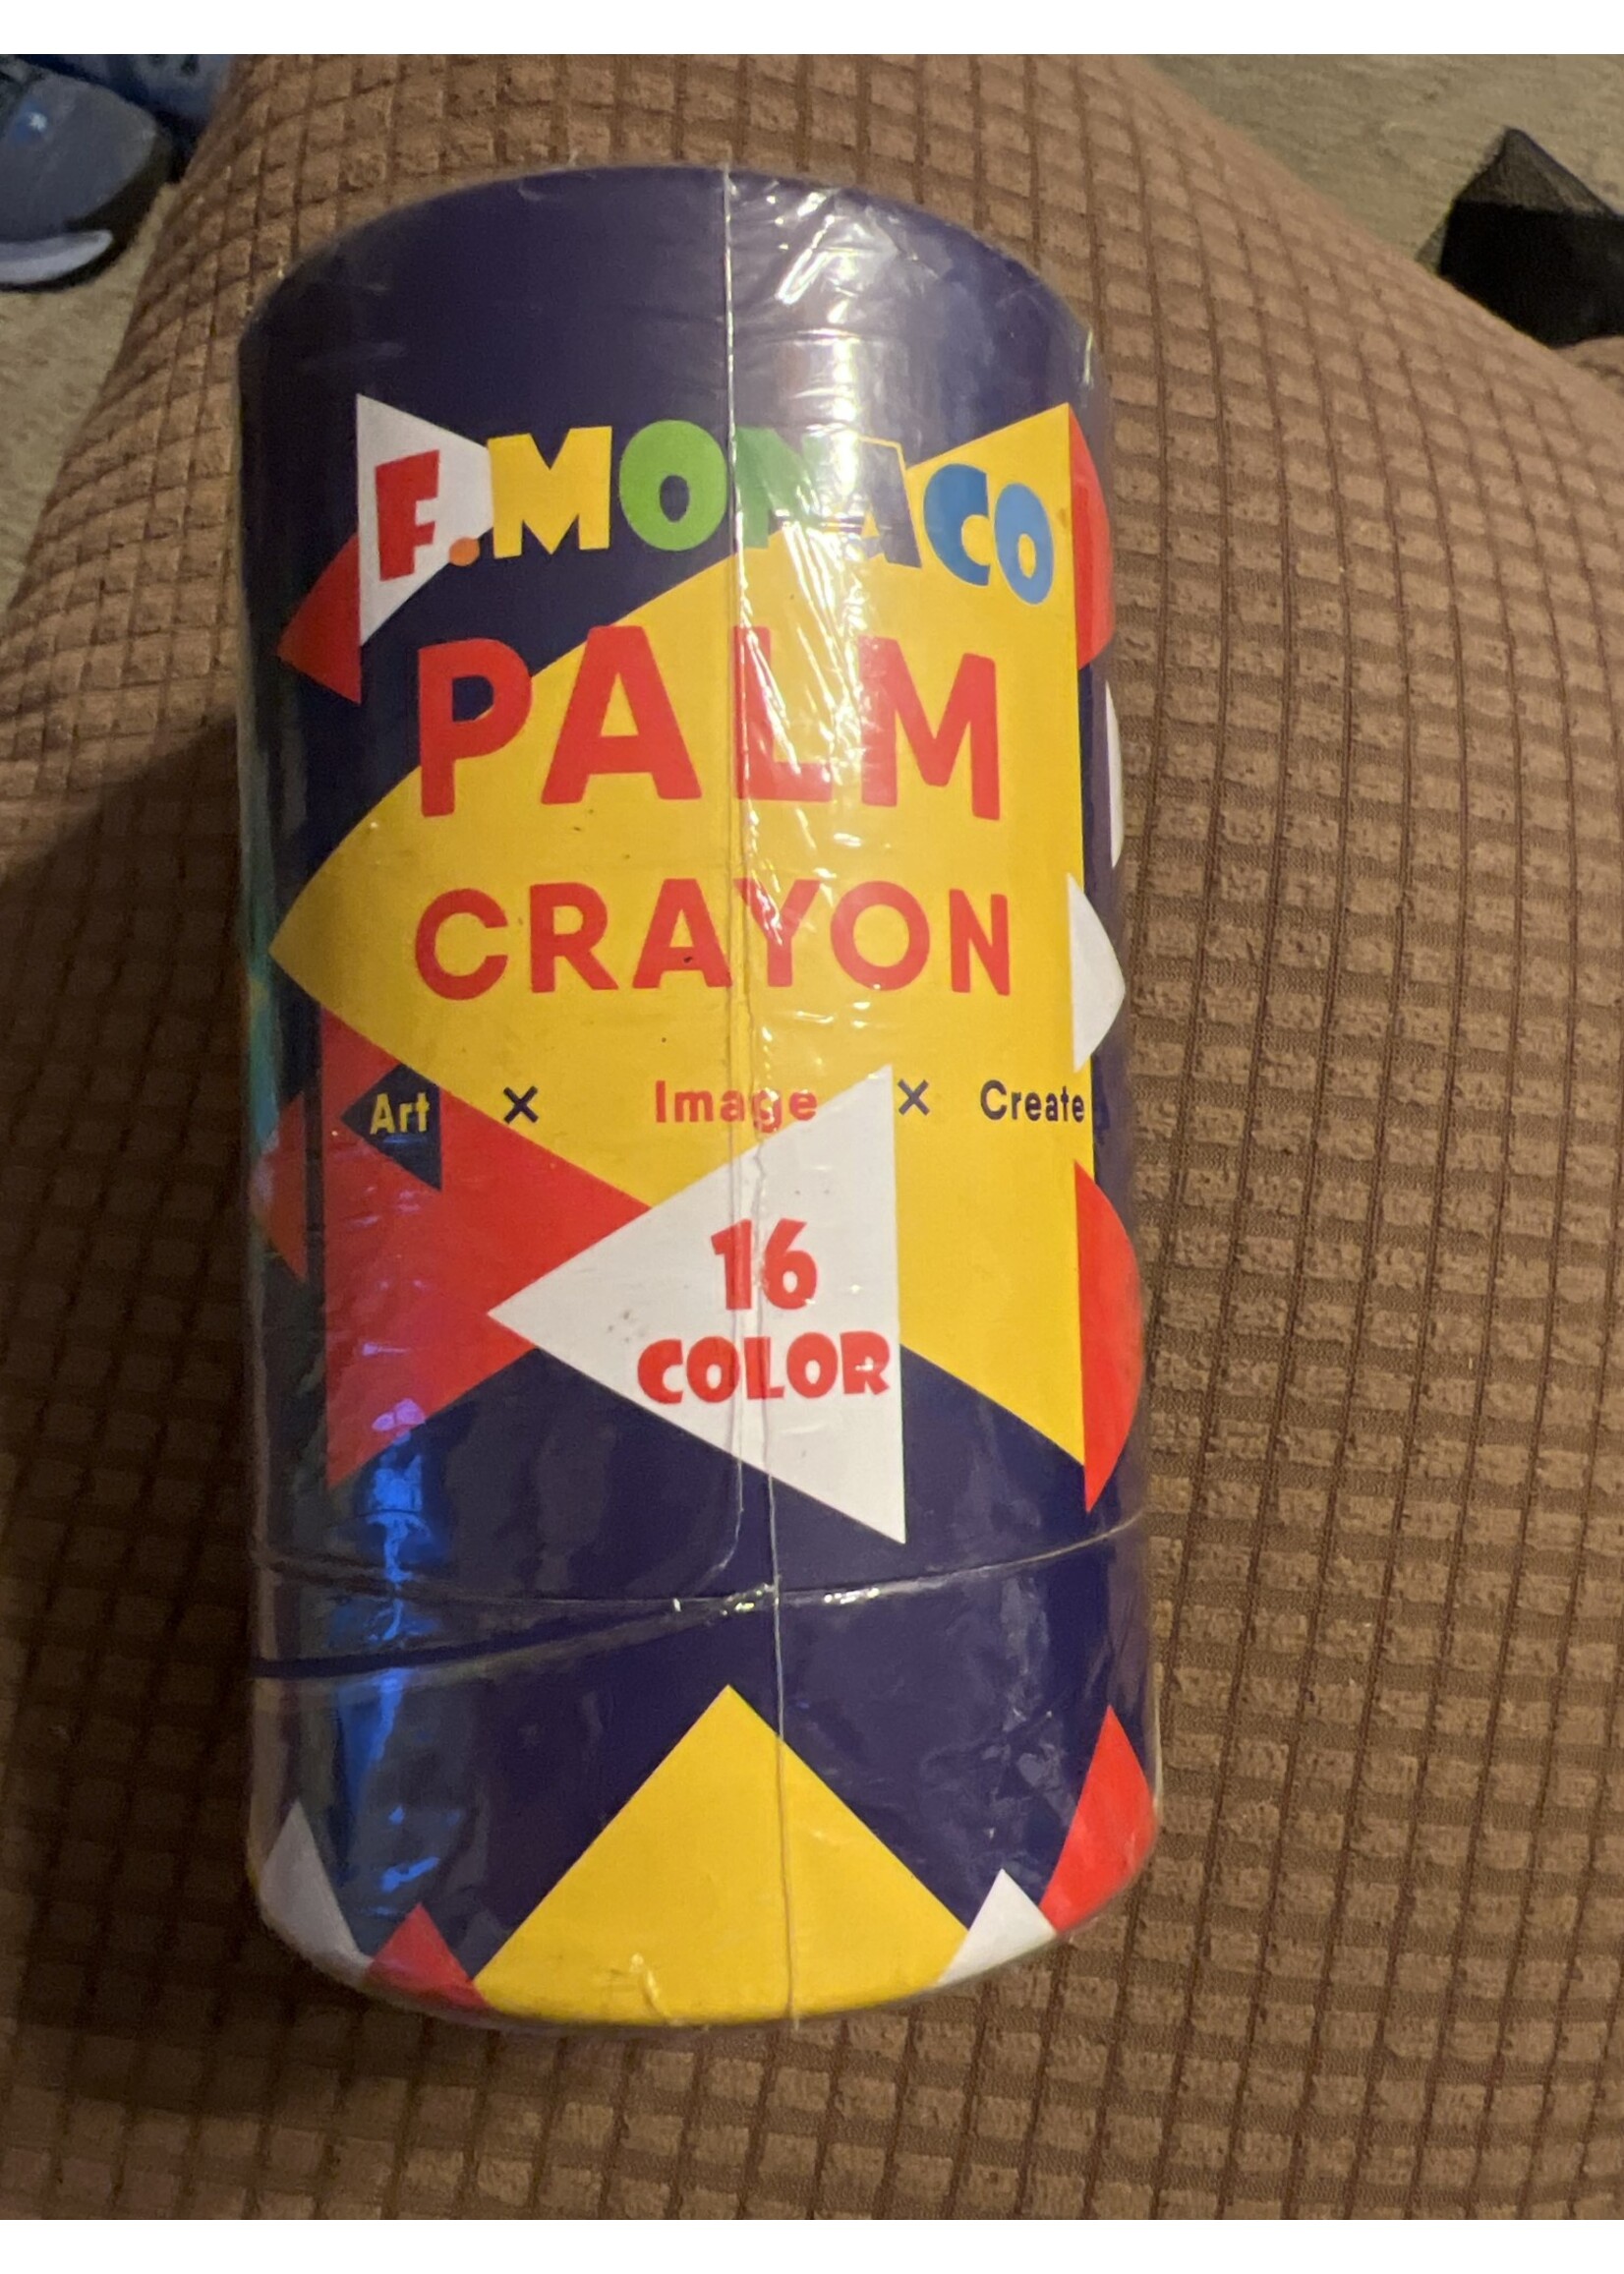 F. Monaco Palm Crayon 16 colors